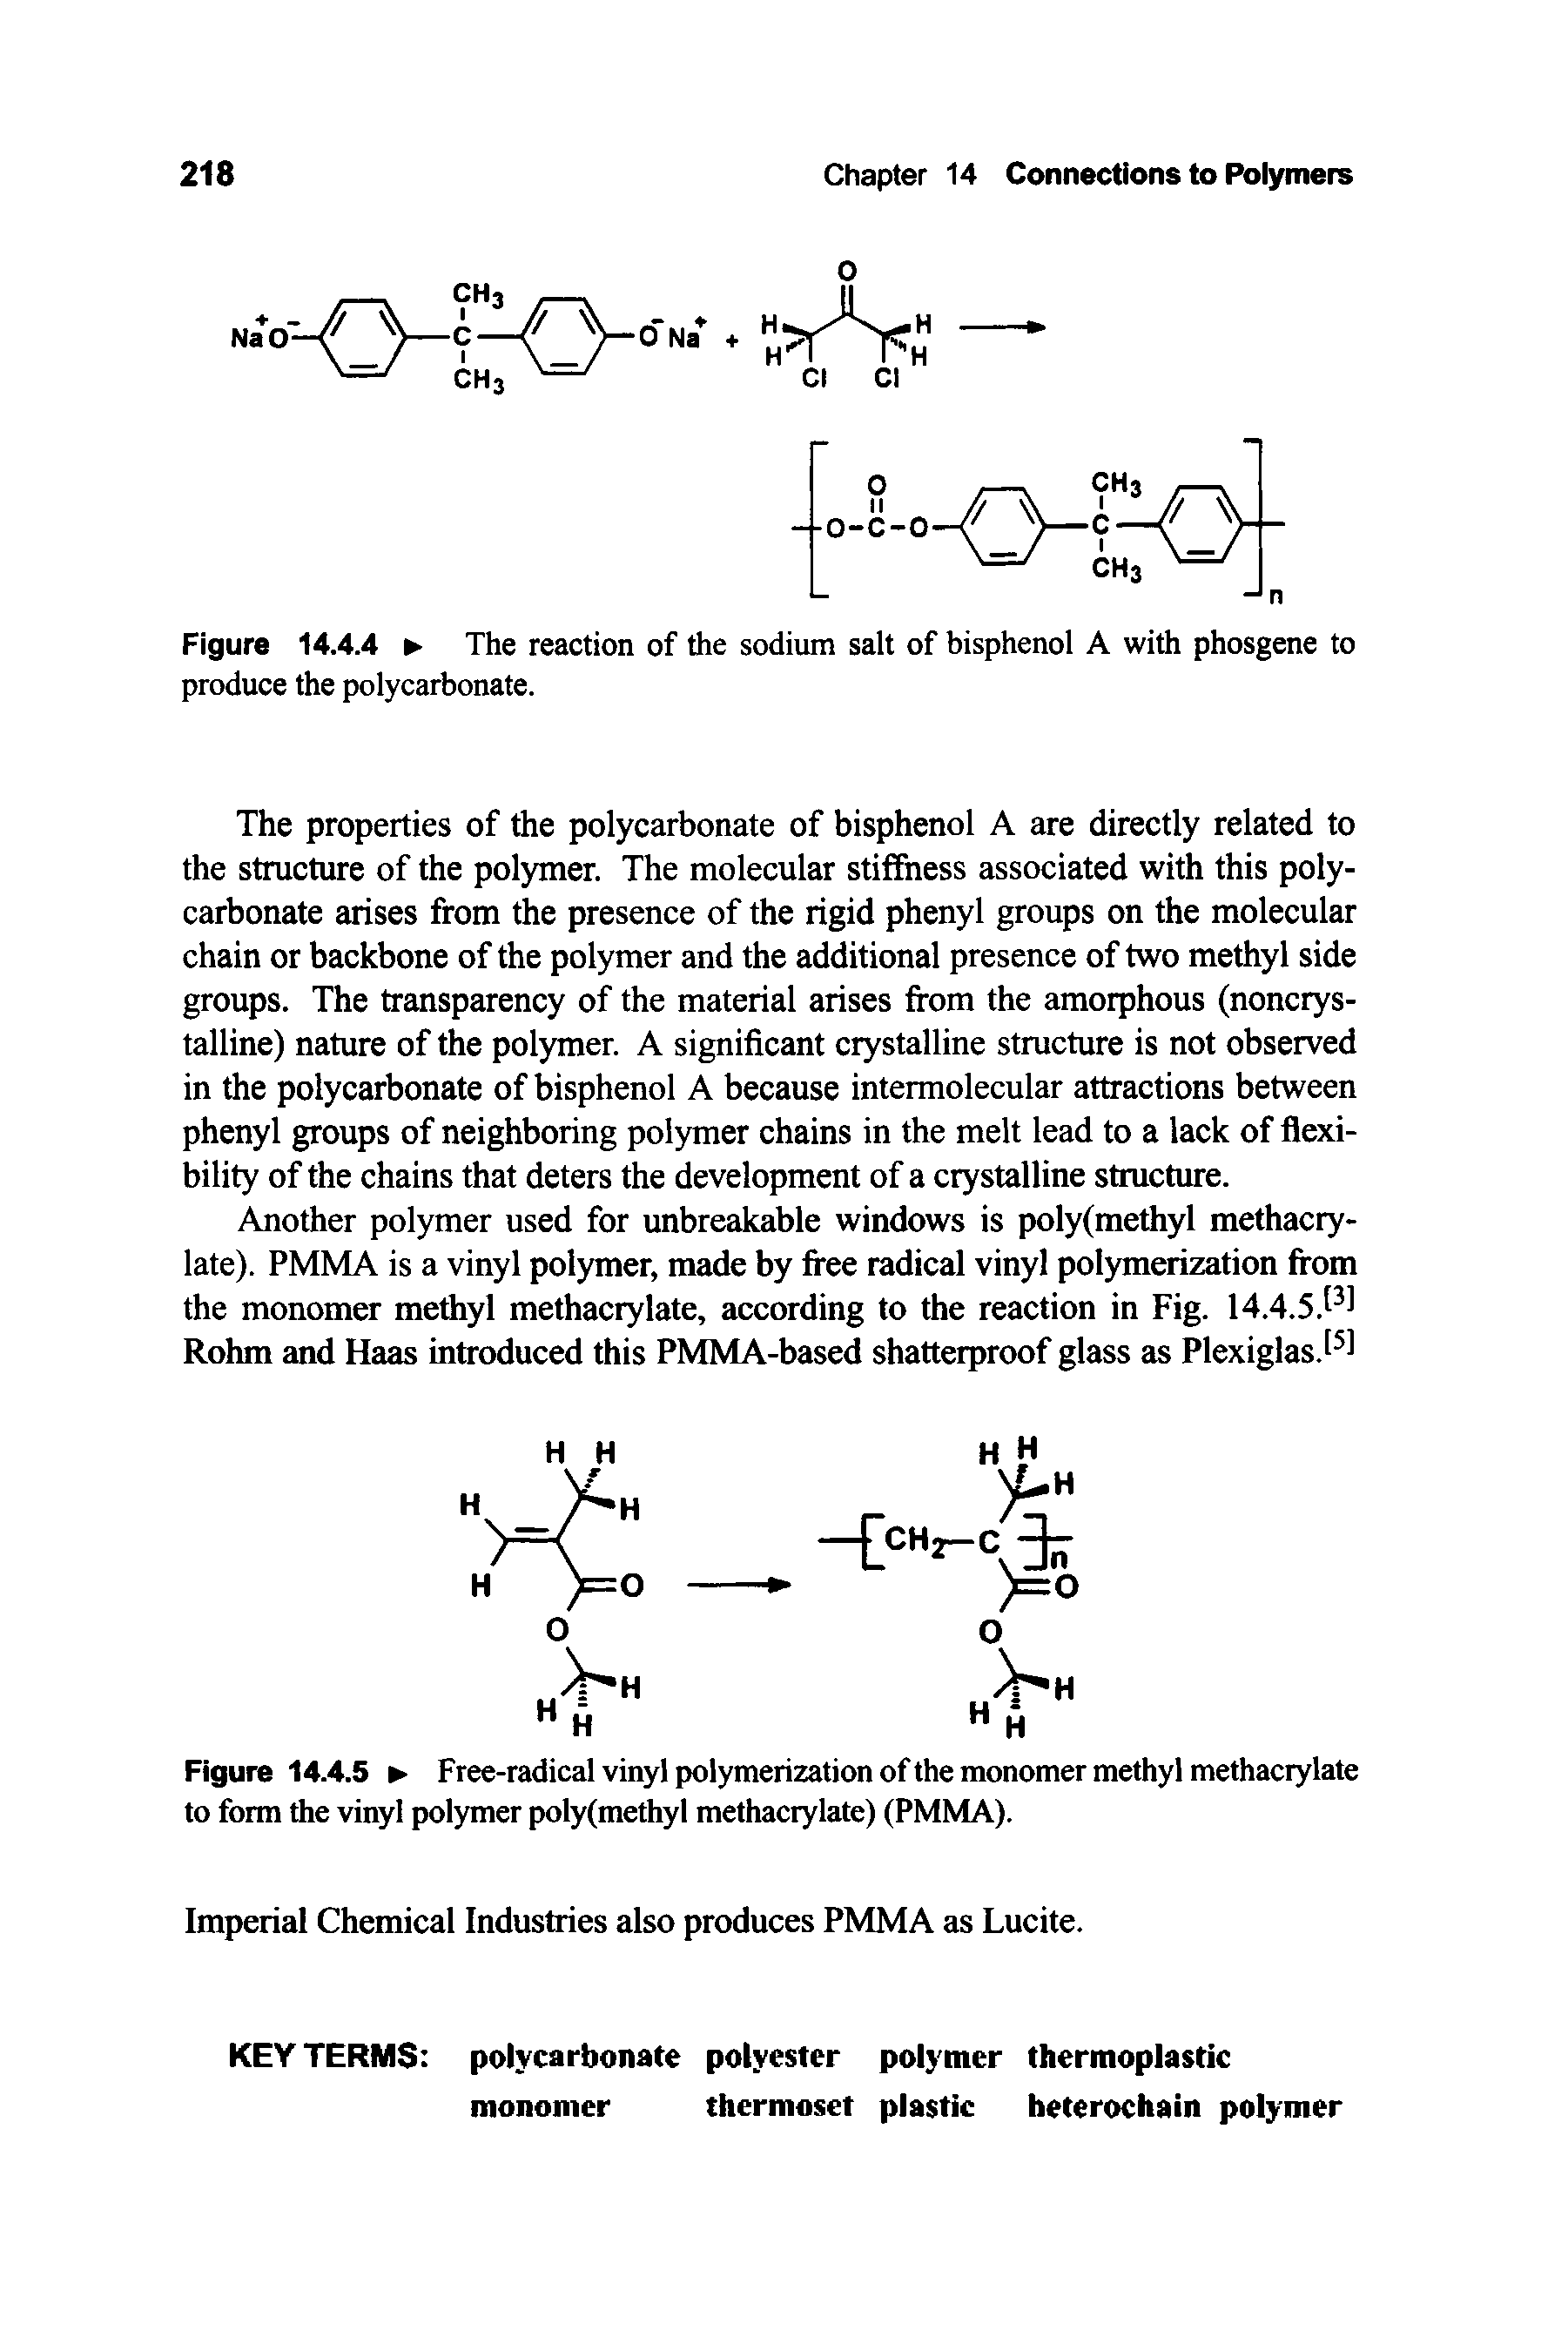 Figure 14.4.5 Free-radical vinyl polymerization of the monomer methyl methacrylate to form the vinyl polymer poly(methyl methacrylate) (PMMA).